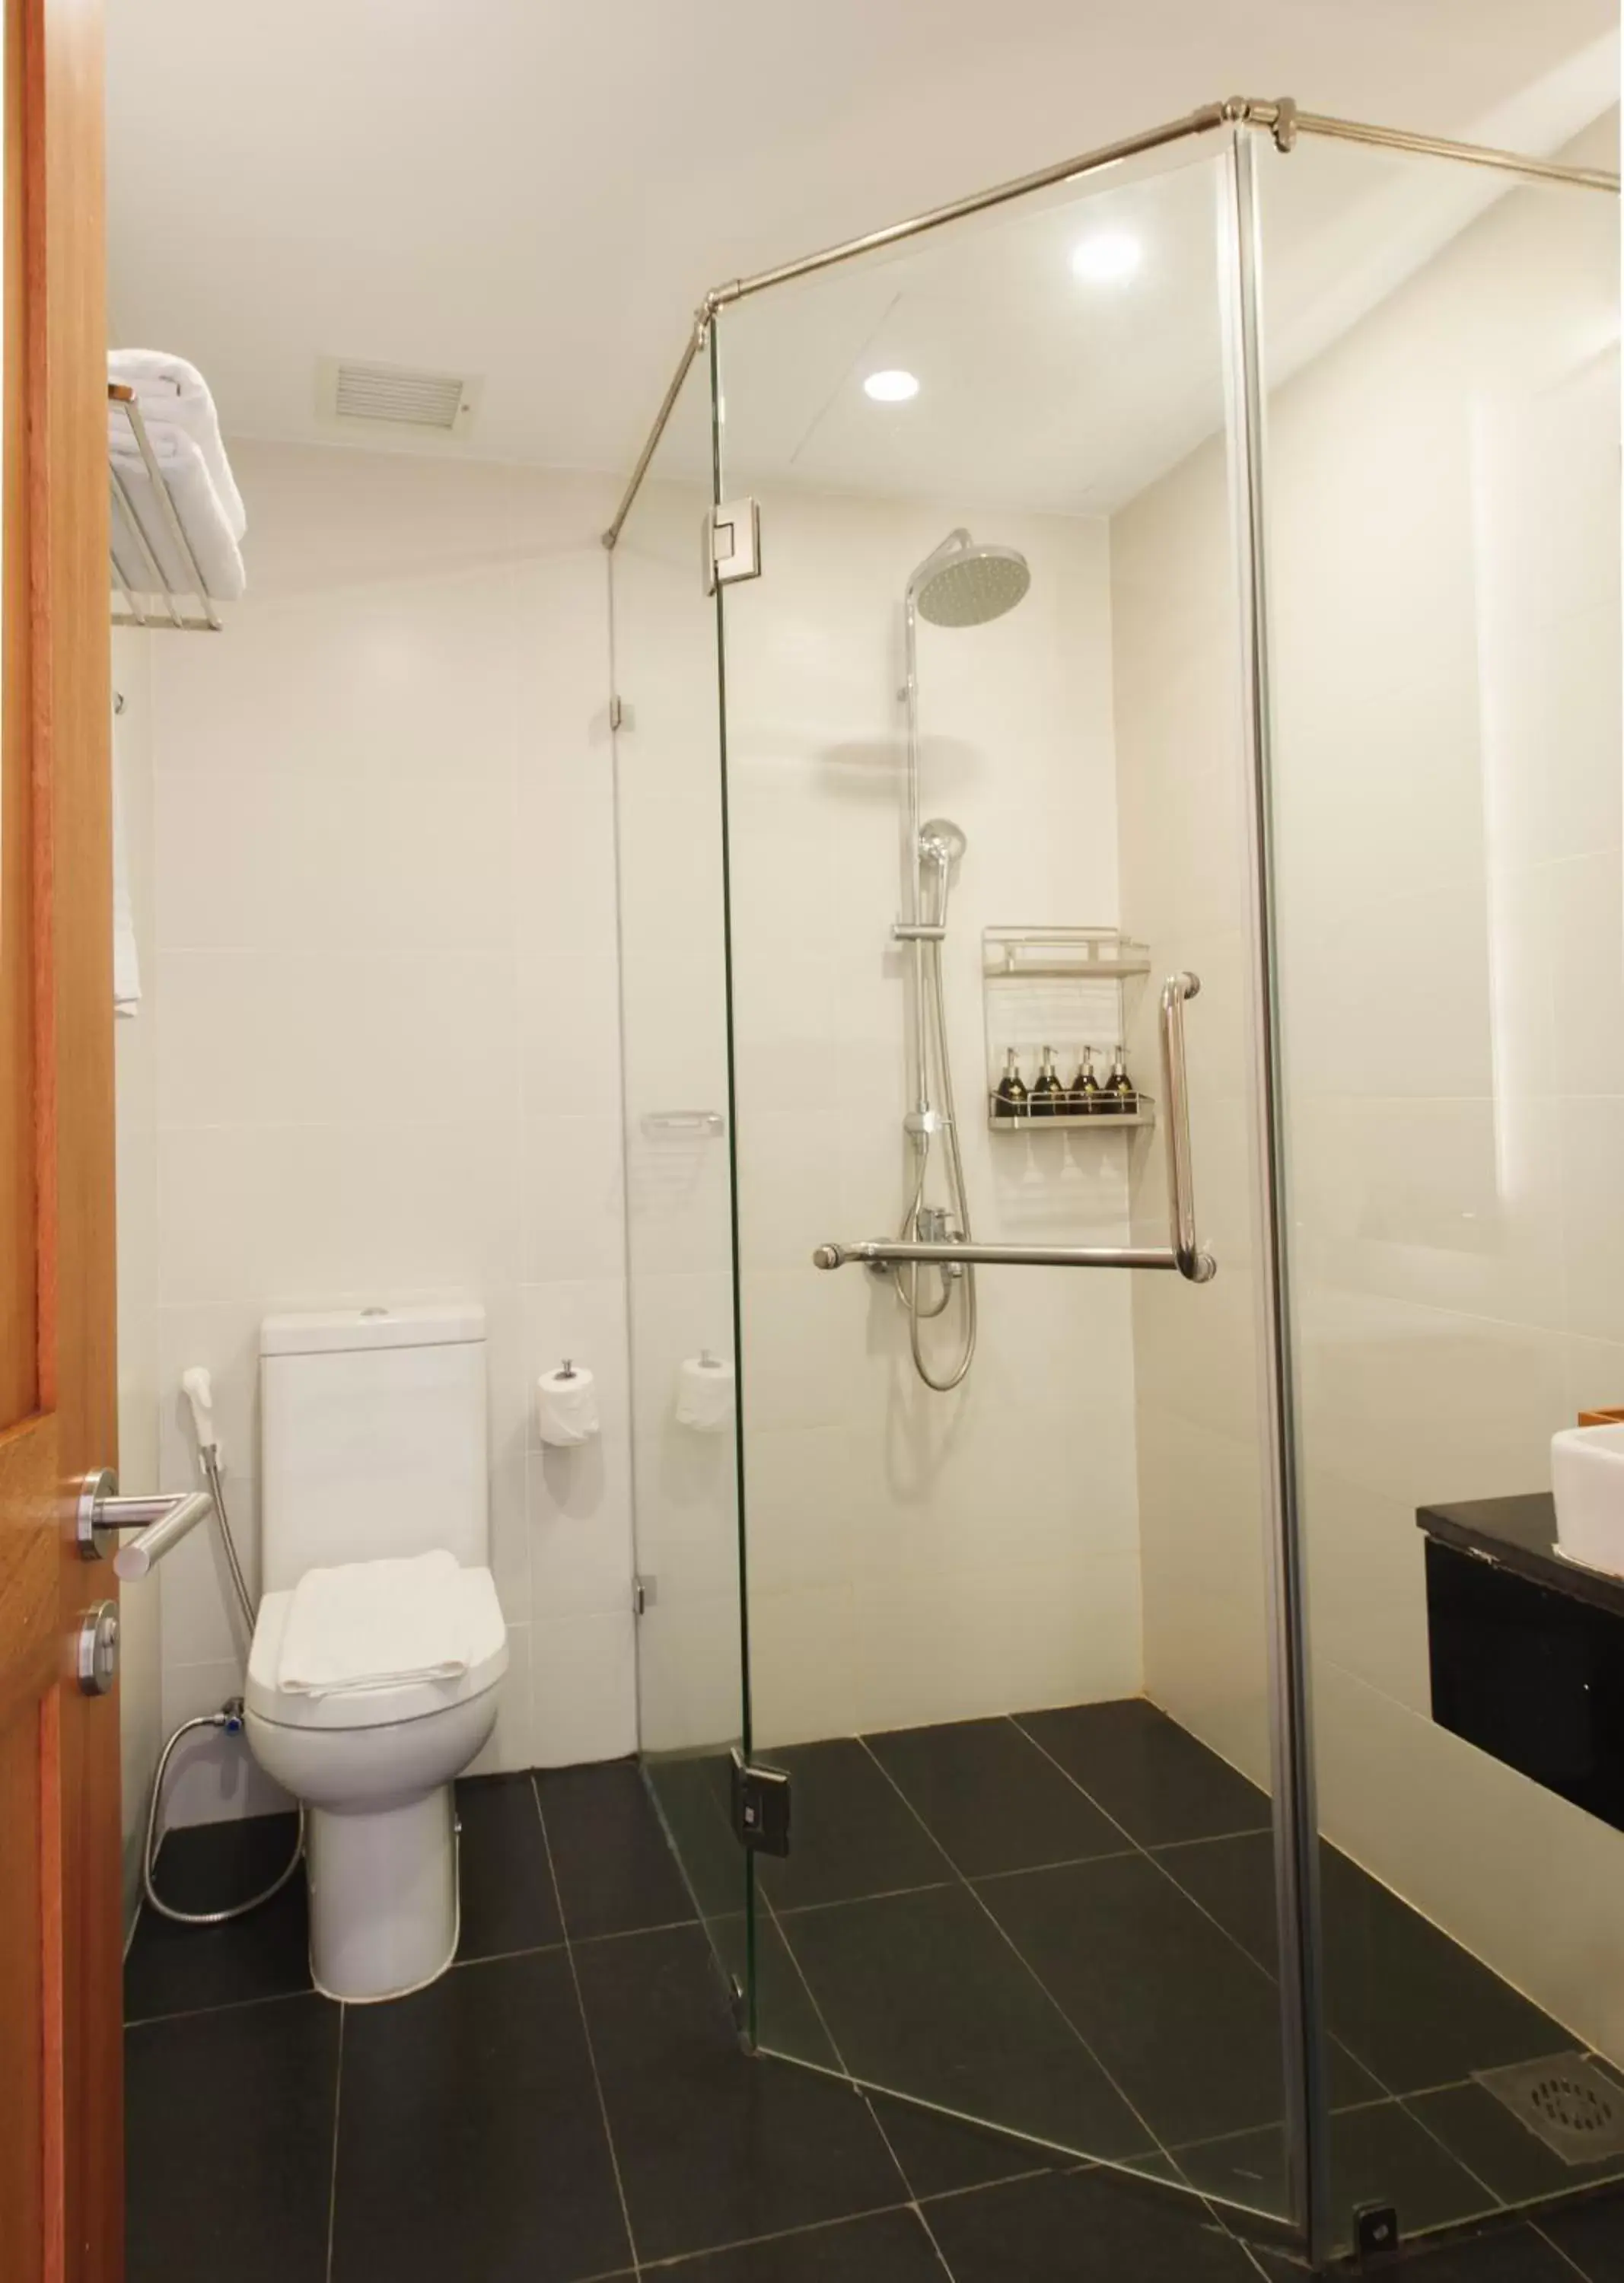 Shower, Bathroom in Maple Hotel & Apartment